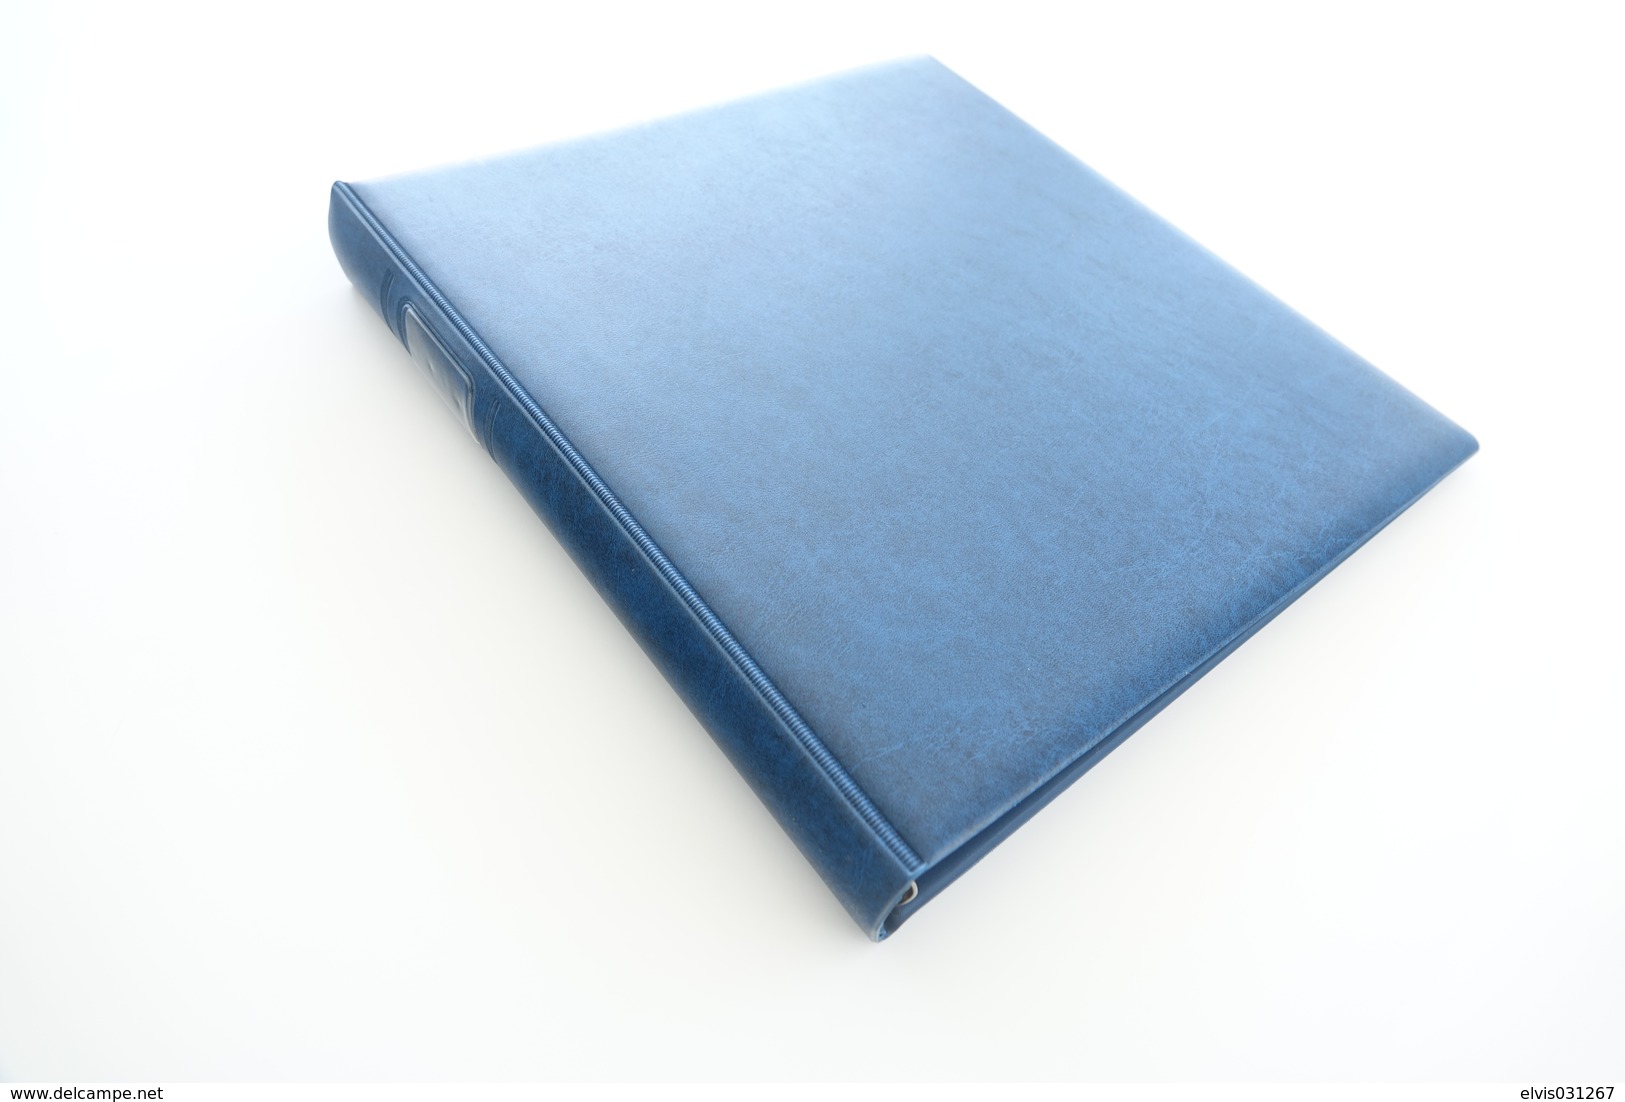 Israel Album - Lindner Album, Blue, 18 Rings, Format 5x30x32cm - Large Format, White Pages